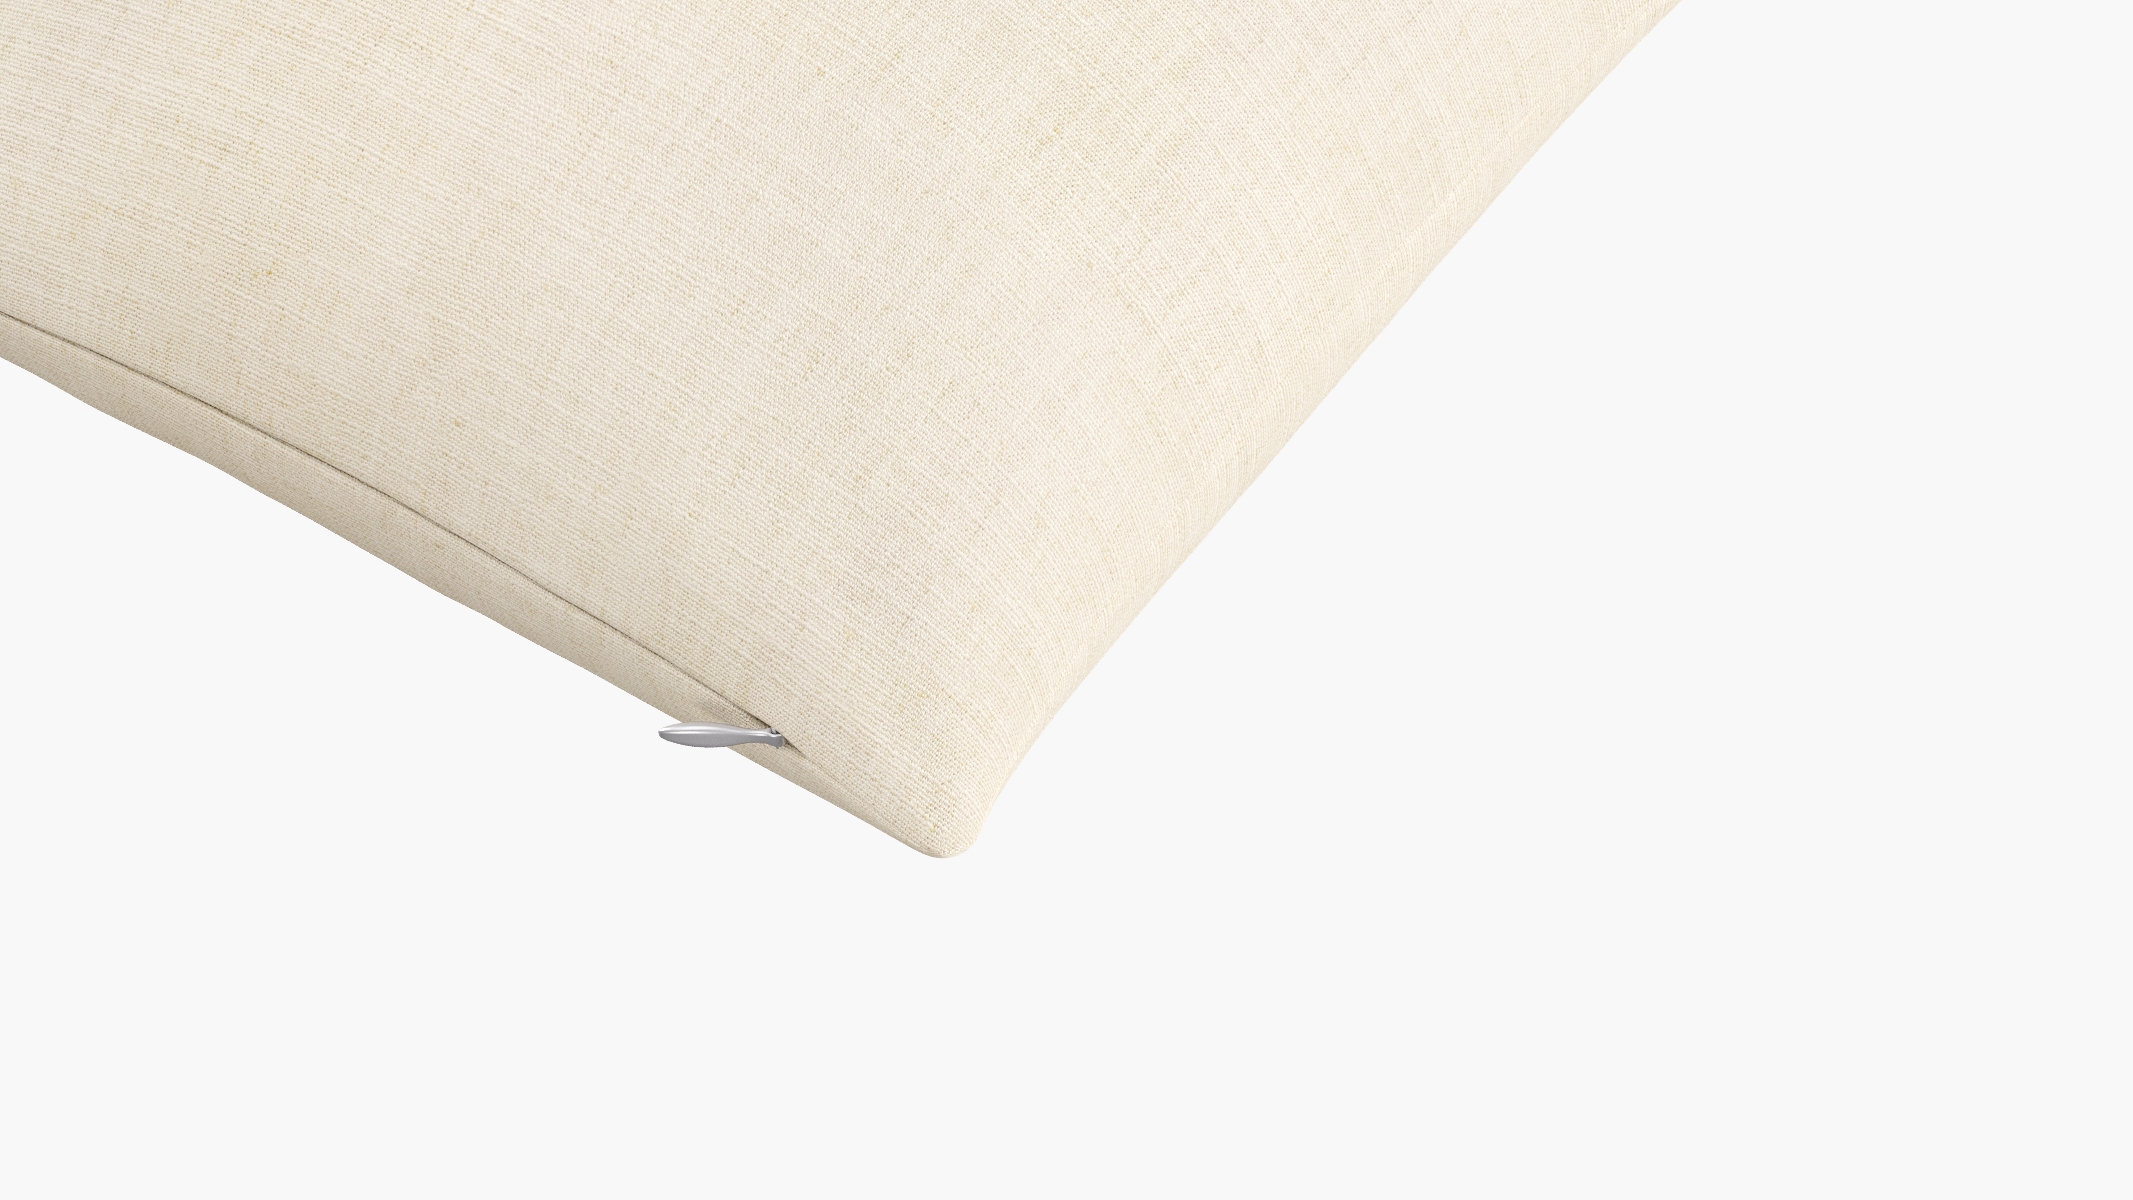 Throw Pillow 16", Talc Everyday Linen, 16" x 16" - Image 1